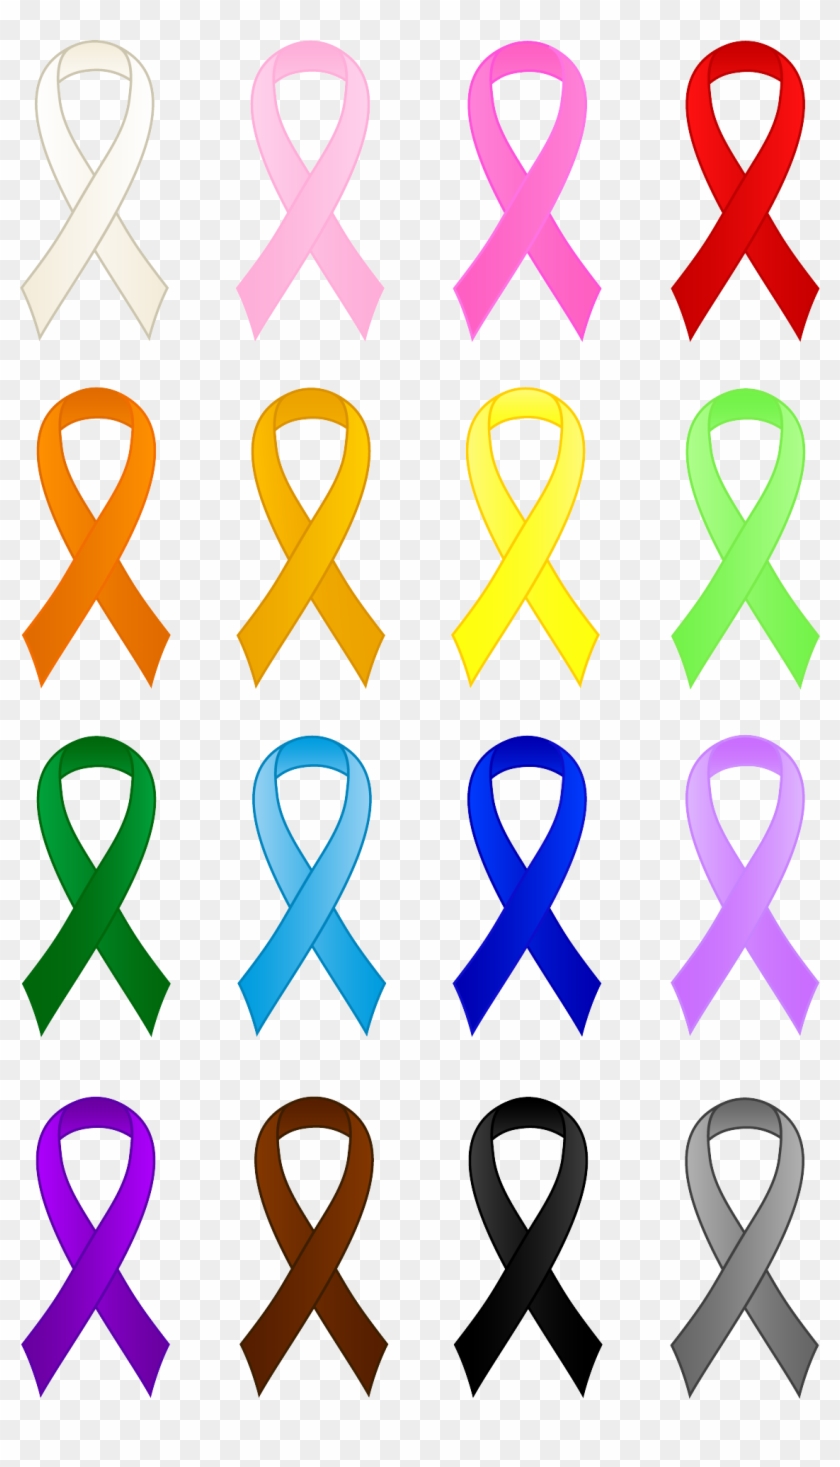 Kill 20clipart - Clip Art Cancer Ribbons #569132